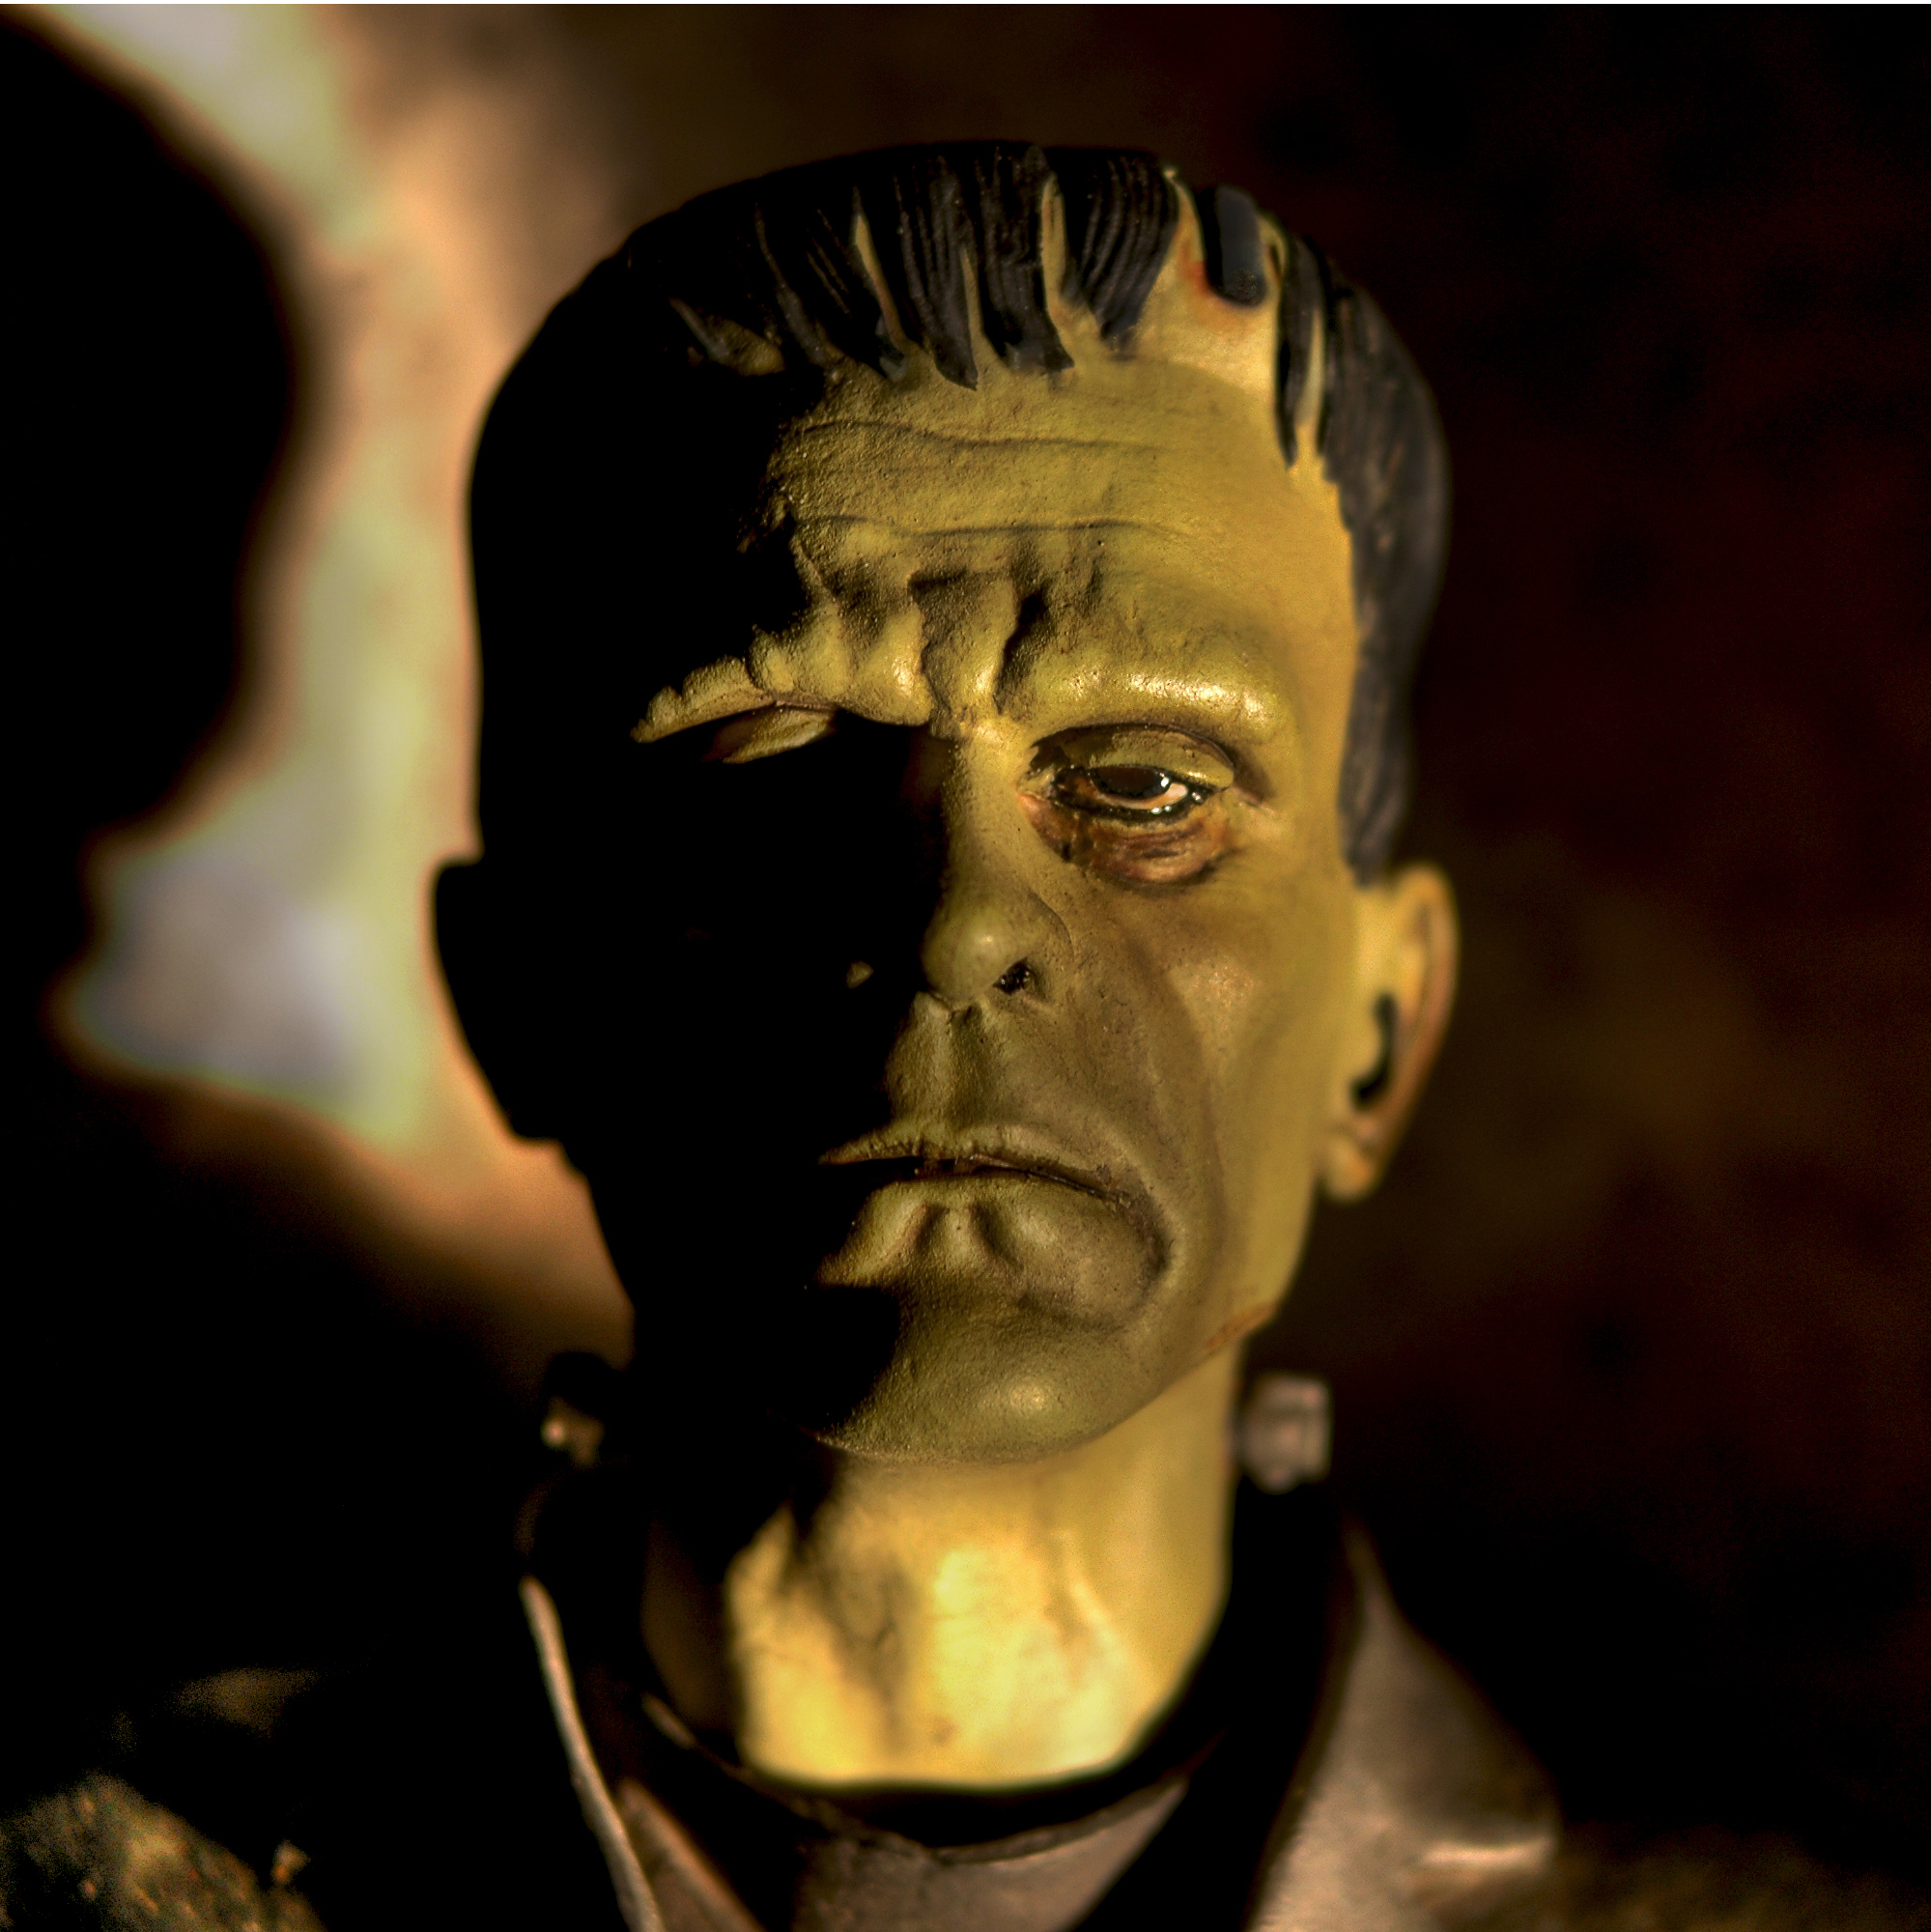 Frankenstein (출처: flickr, 원저작자: Rlccardo Cupplnl)